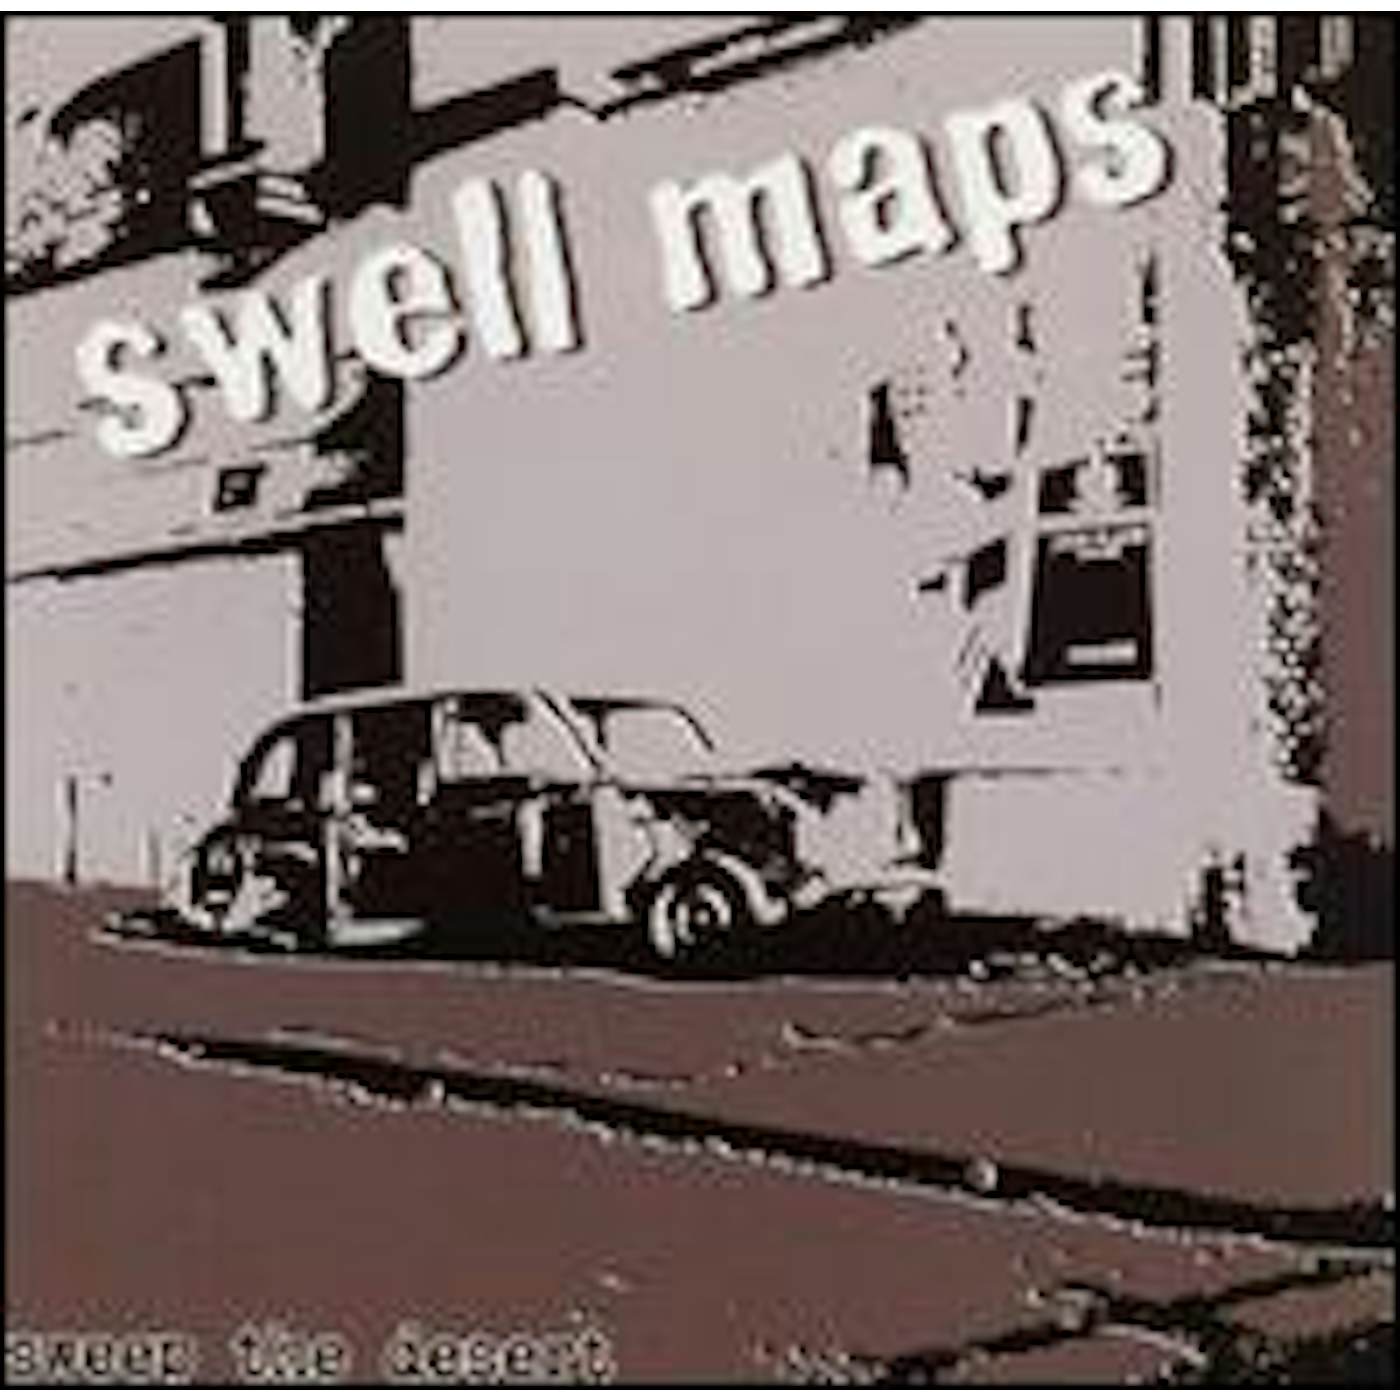 Swell Maps SWEEP THE DESERT CD